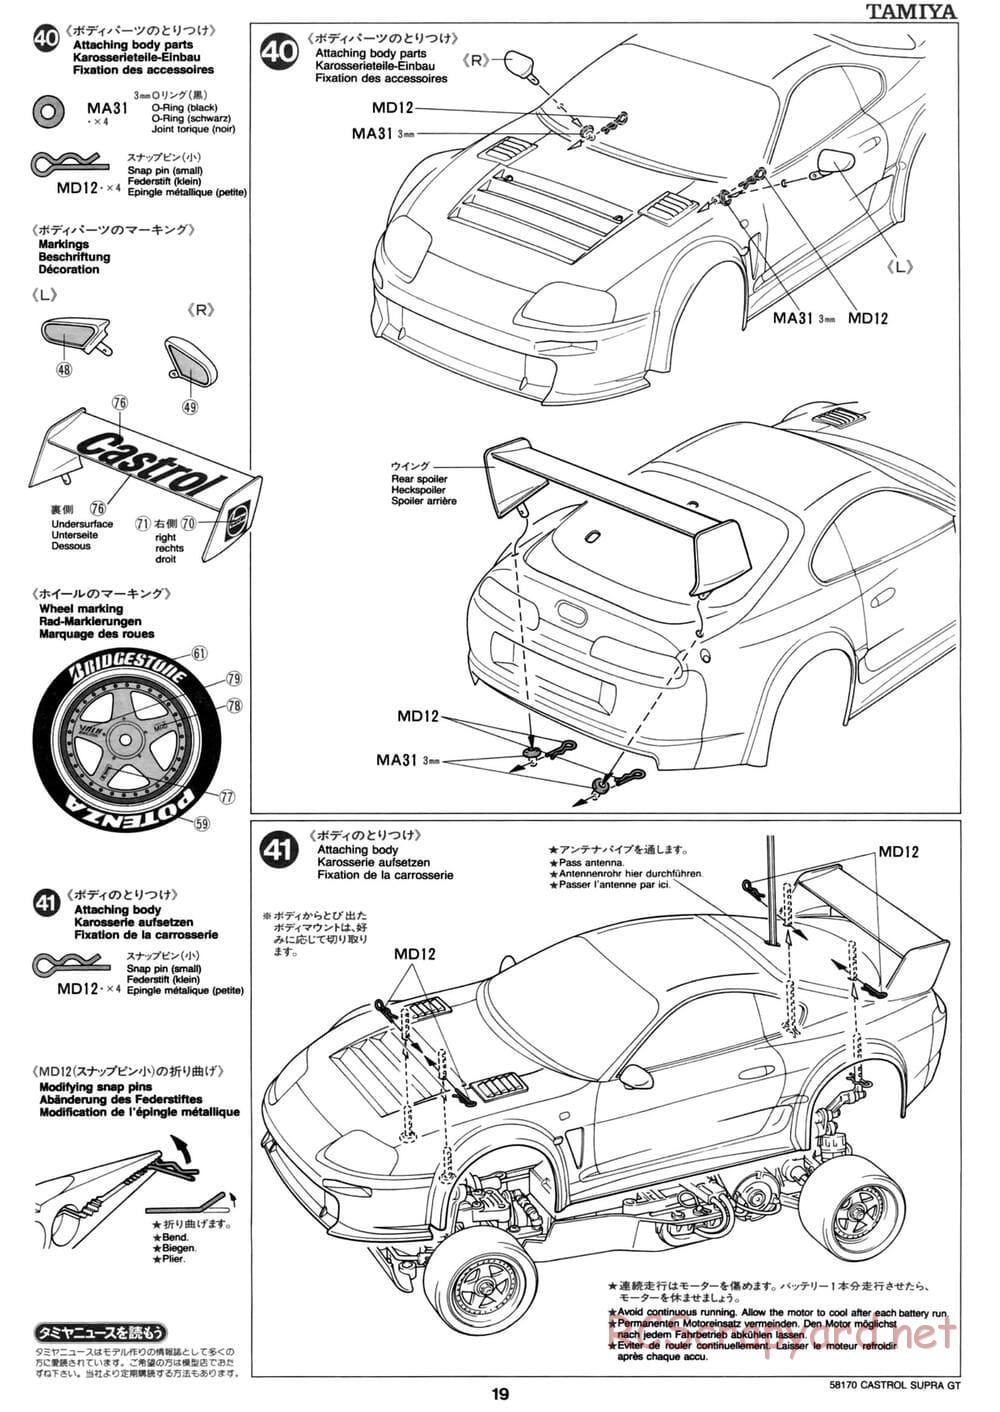 Tamiya - Castrol Toyota Tom's Supra GT - TA-02W Chassis - Manual - Page 19